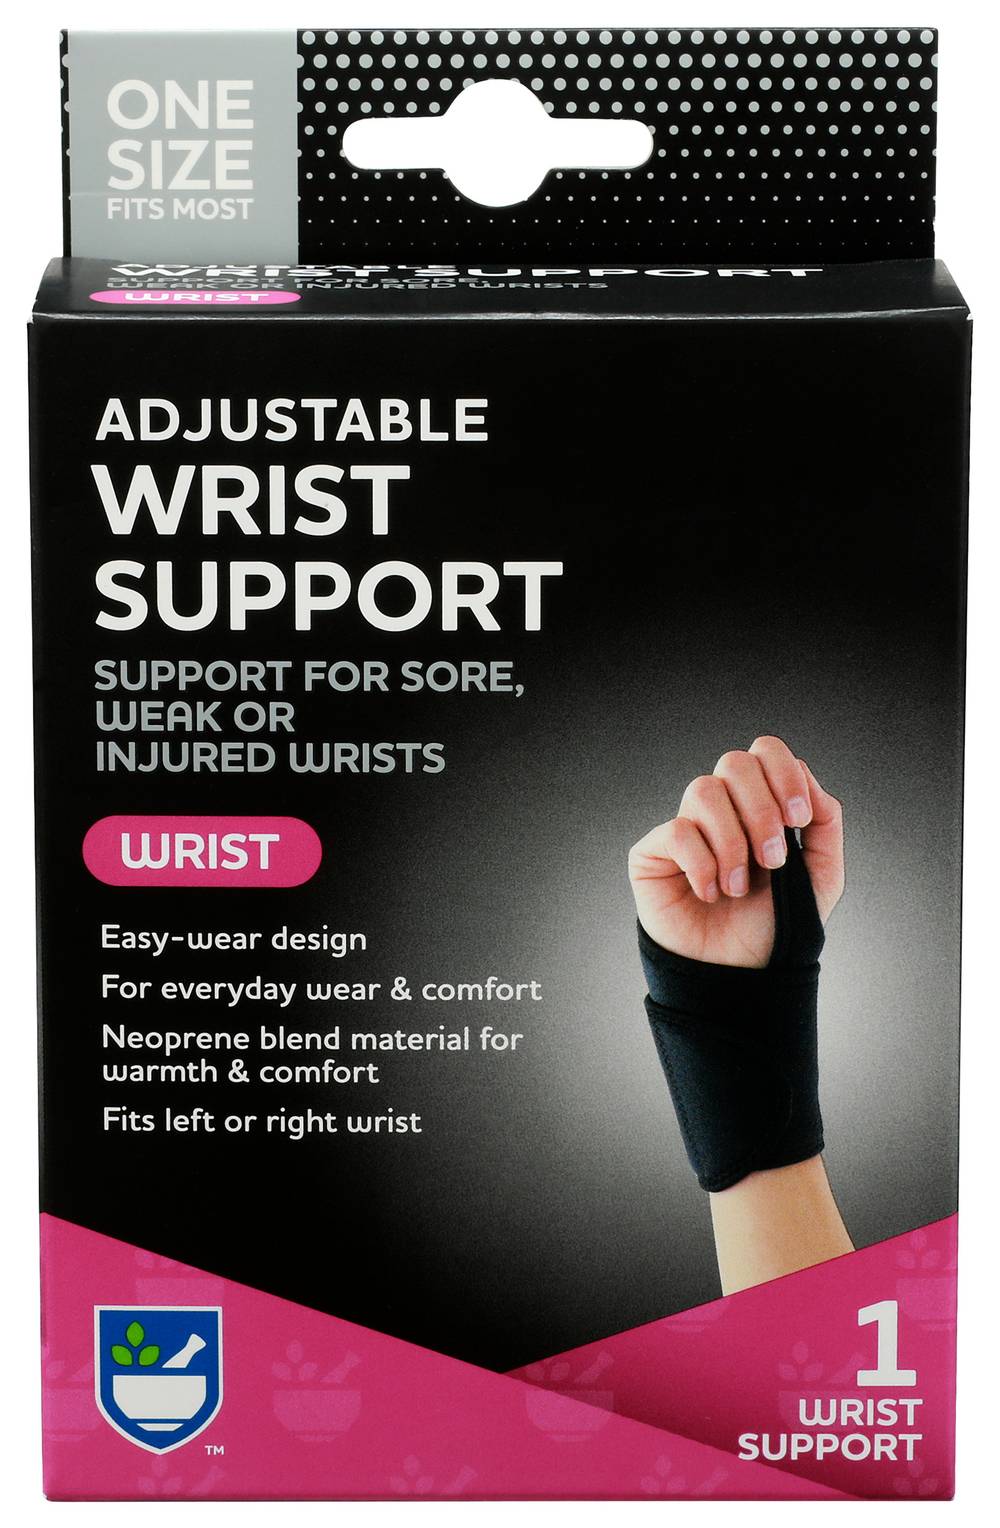 Rite Aid Adjustable Wrist Support